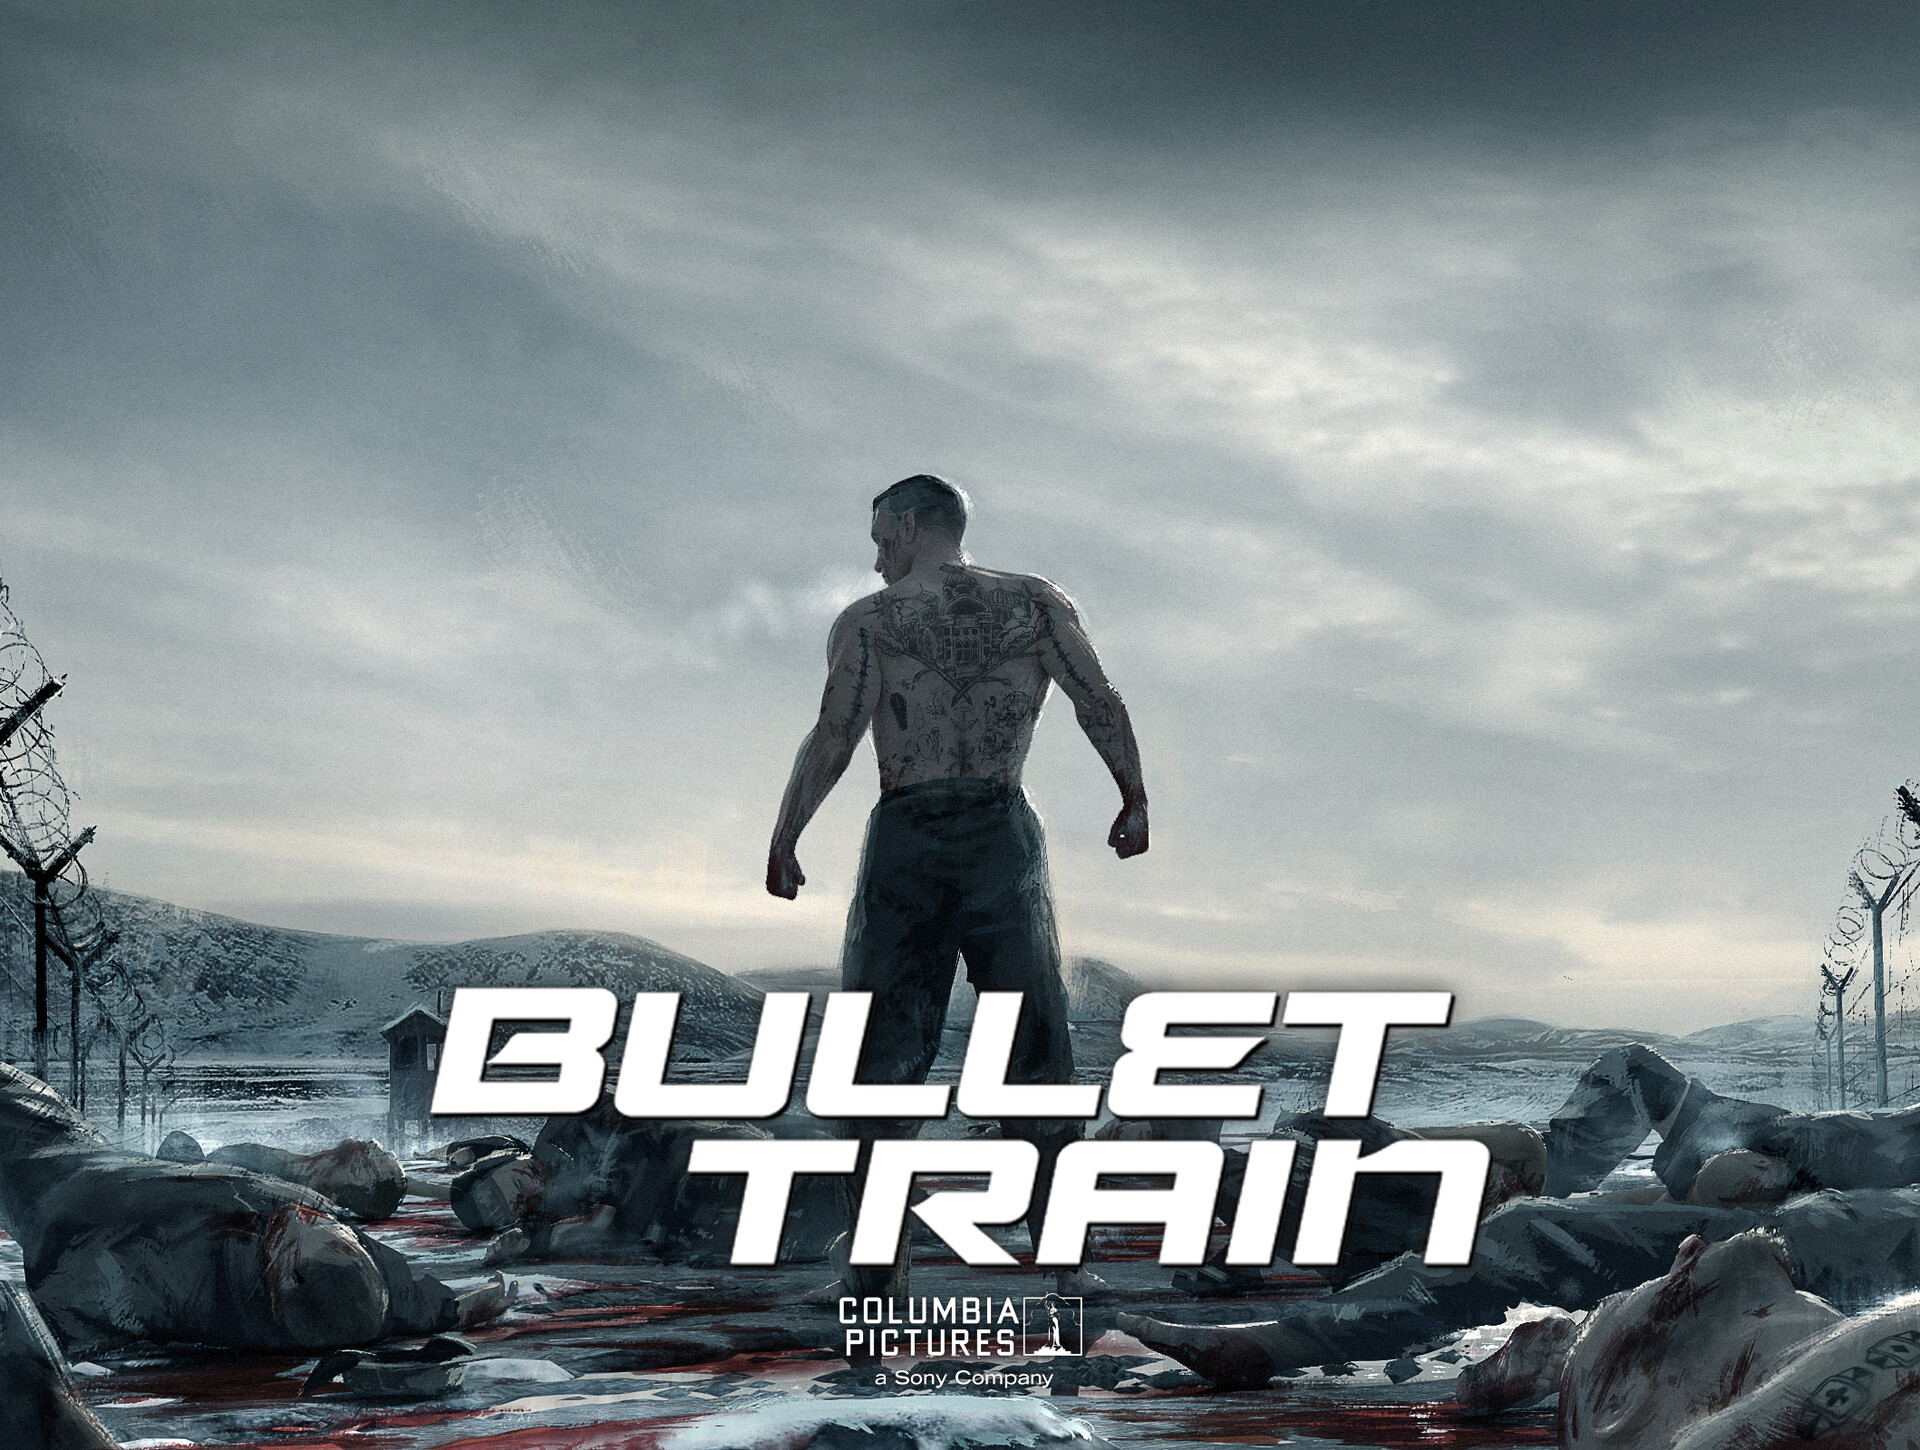 ArtStation - Bullet Train - The Train Crash